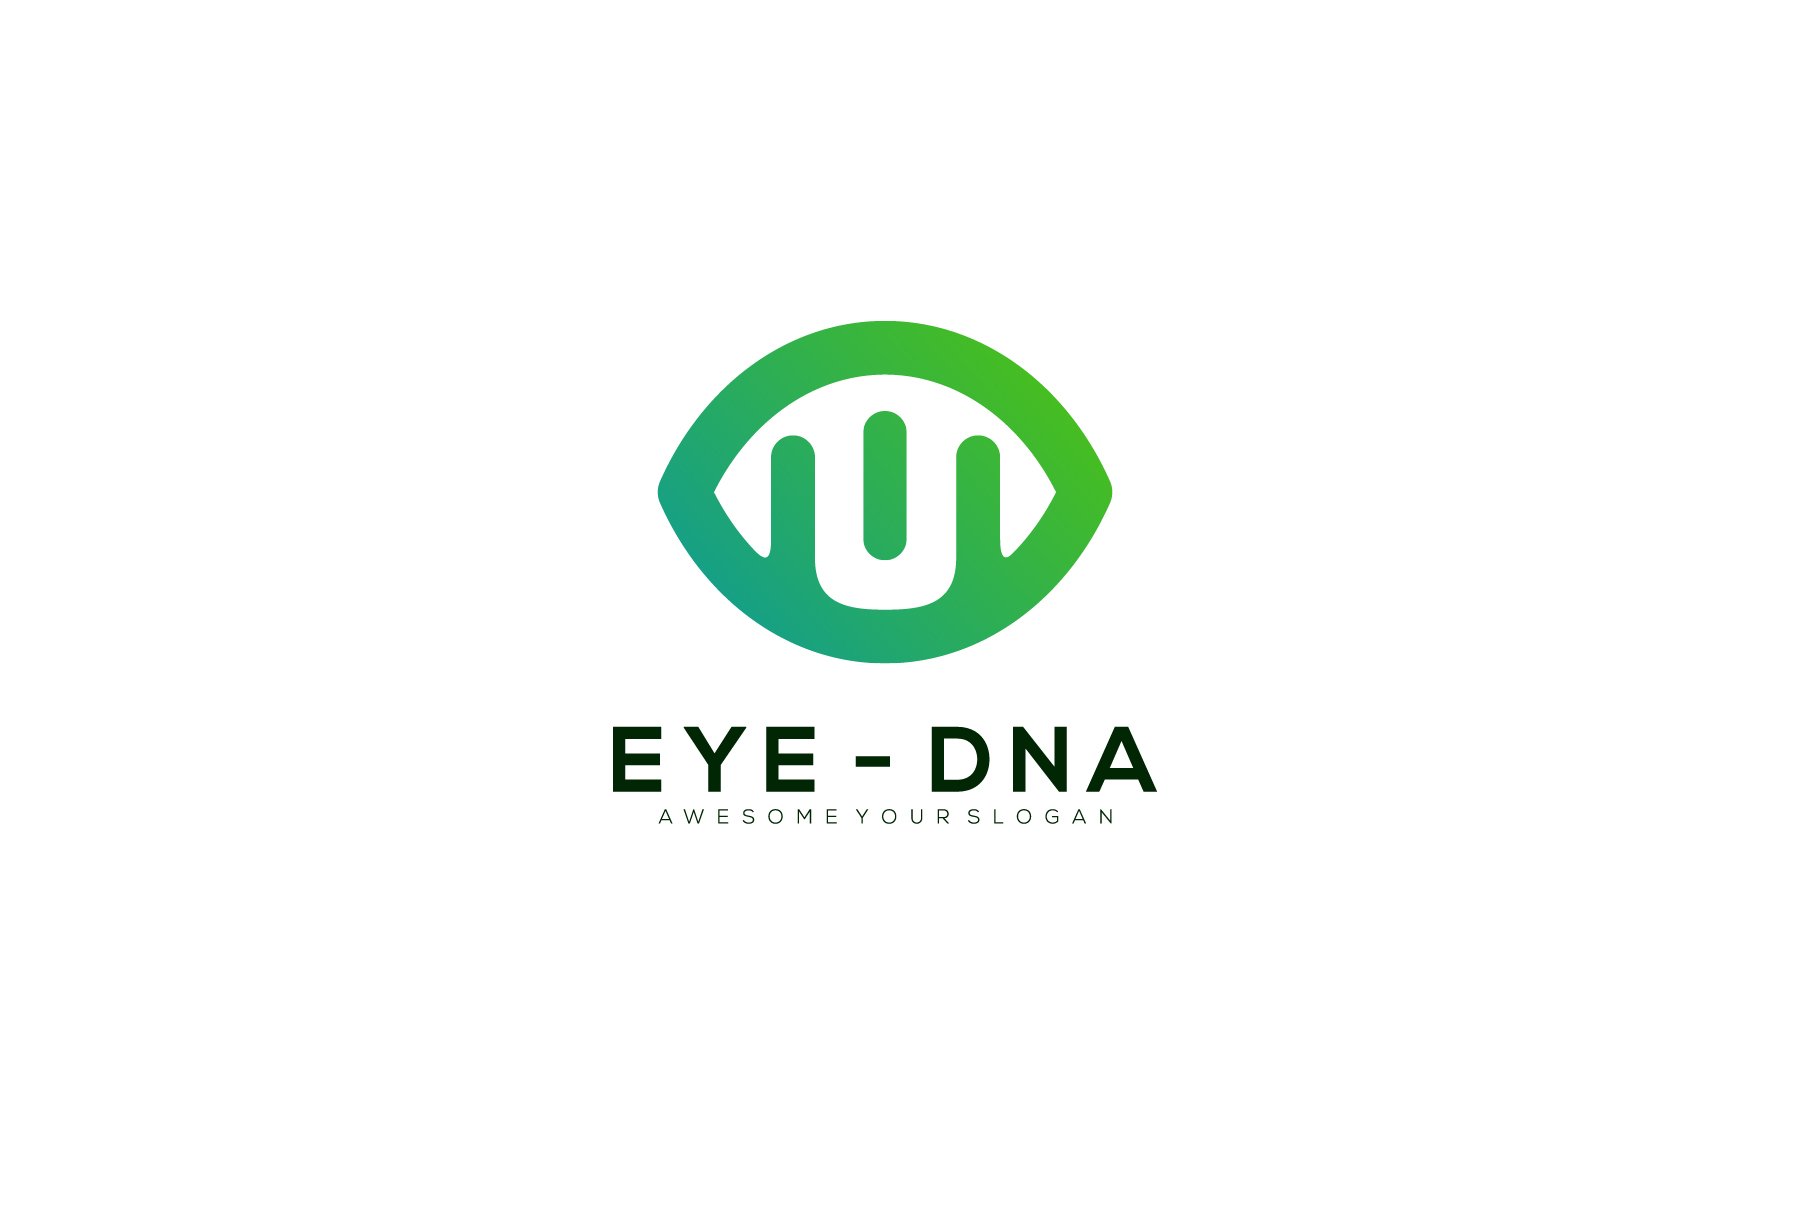 Dna Eye Icon Logo Design Element cover image.